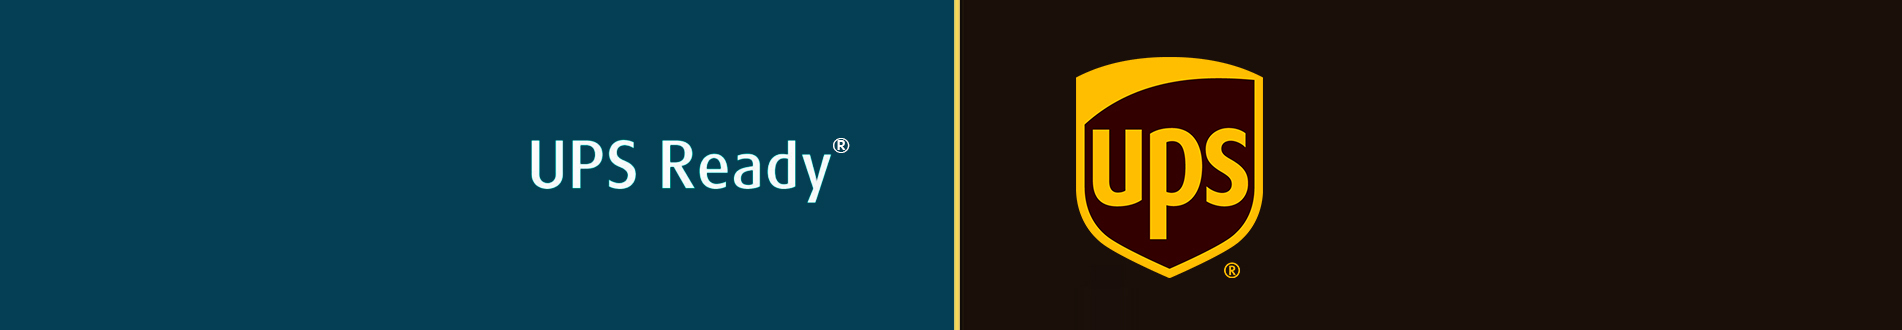 UPS-ready-banner1